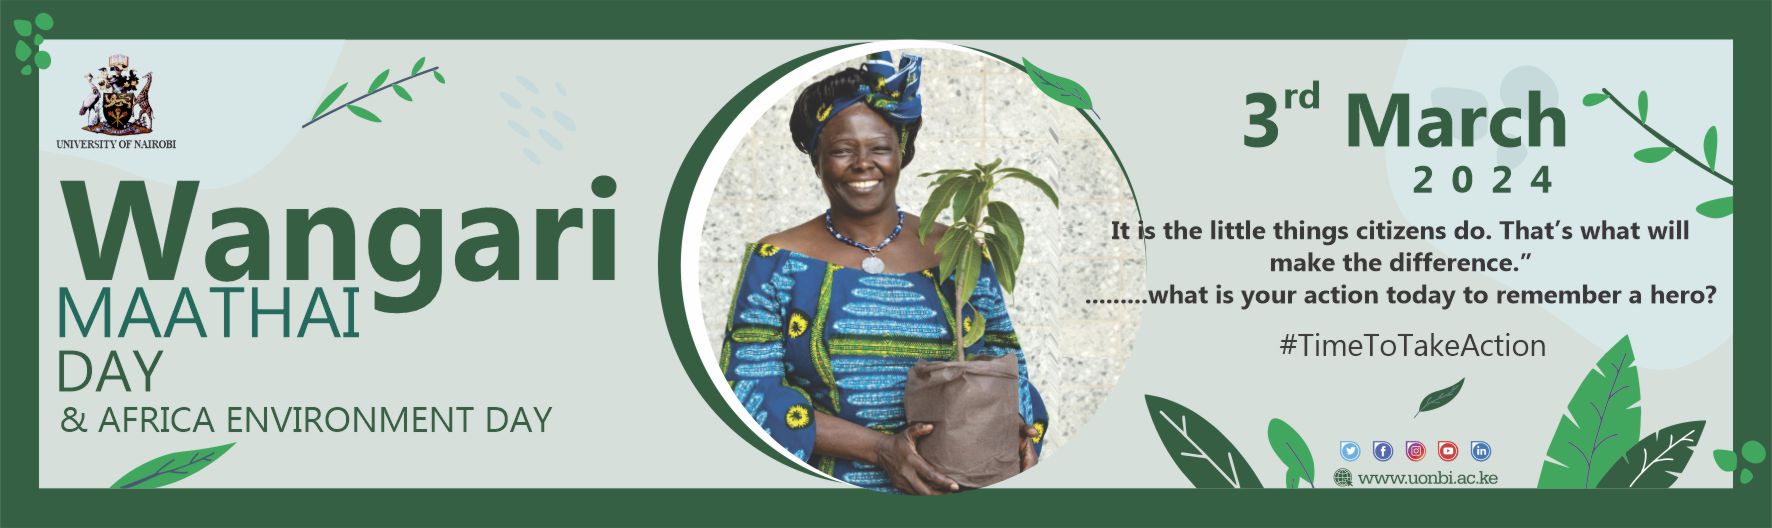 Wangari Maathai Day web.jpg